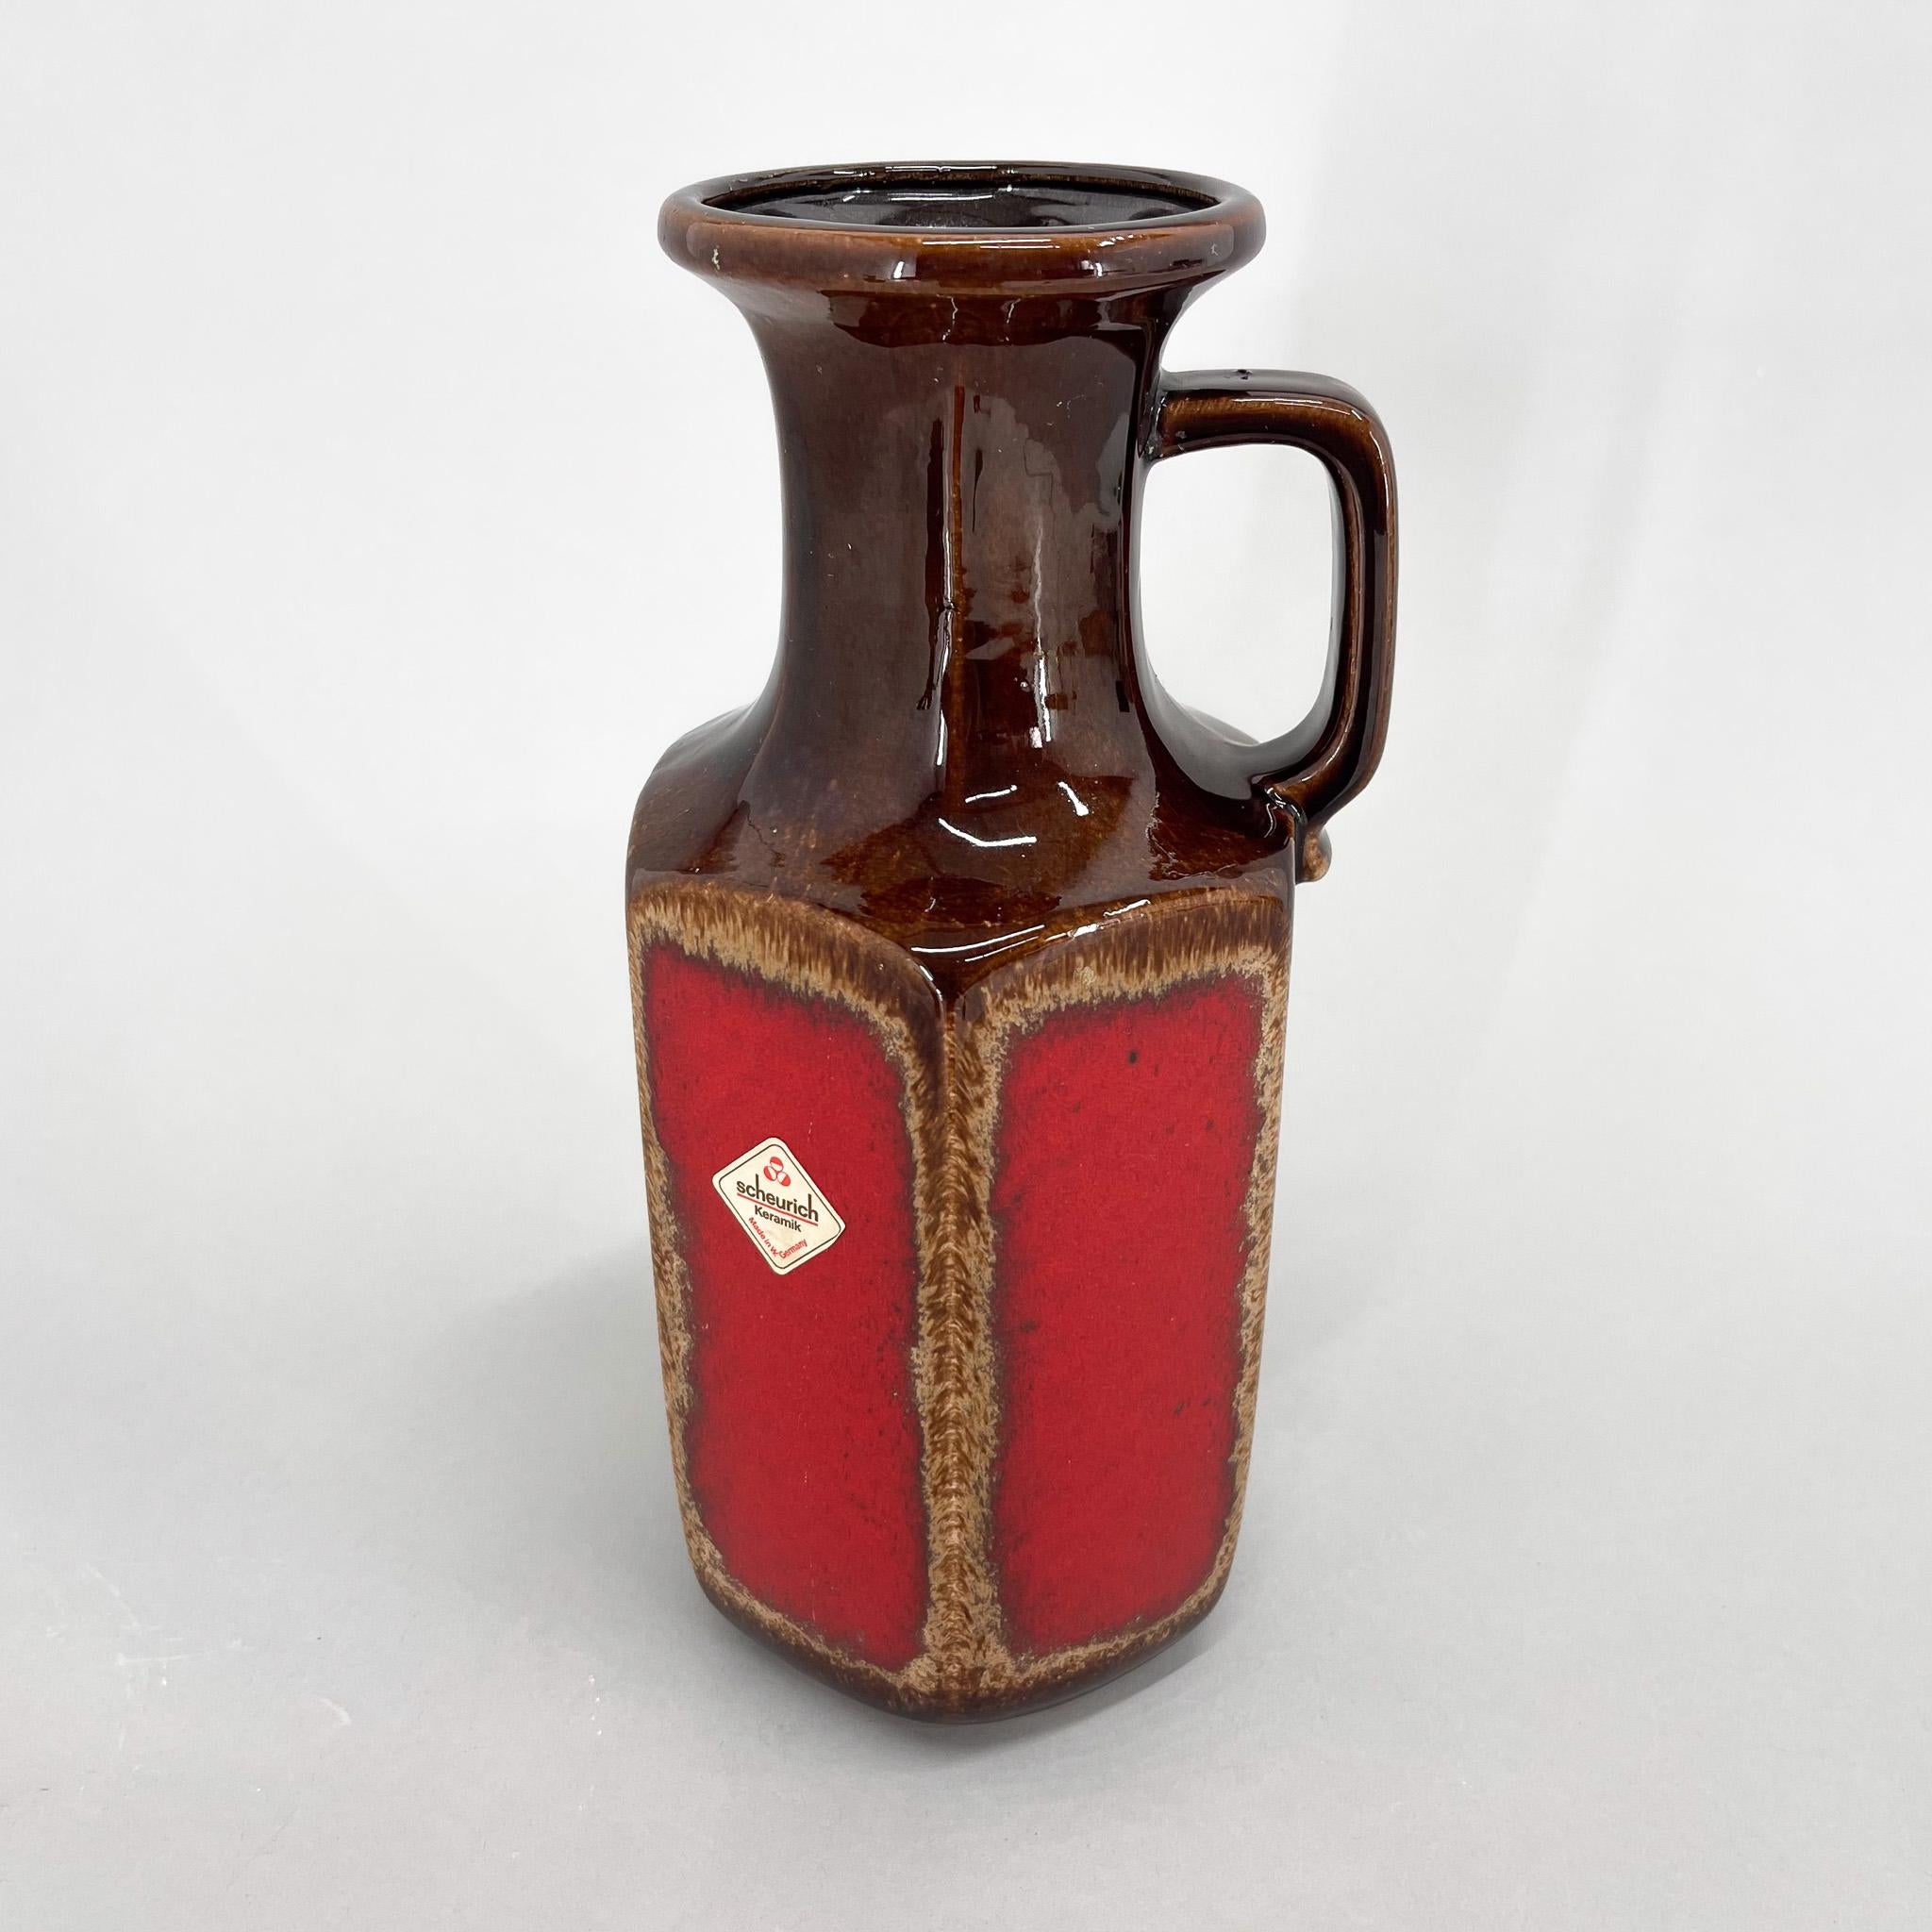 1970s Glazed Ceramic German Vase/Jug by Scheurich Keramik, Labeled In Good Condition For Sale In Praha, CZ